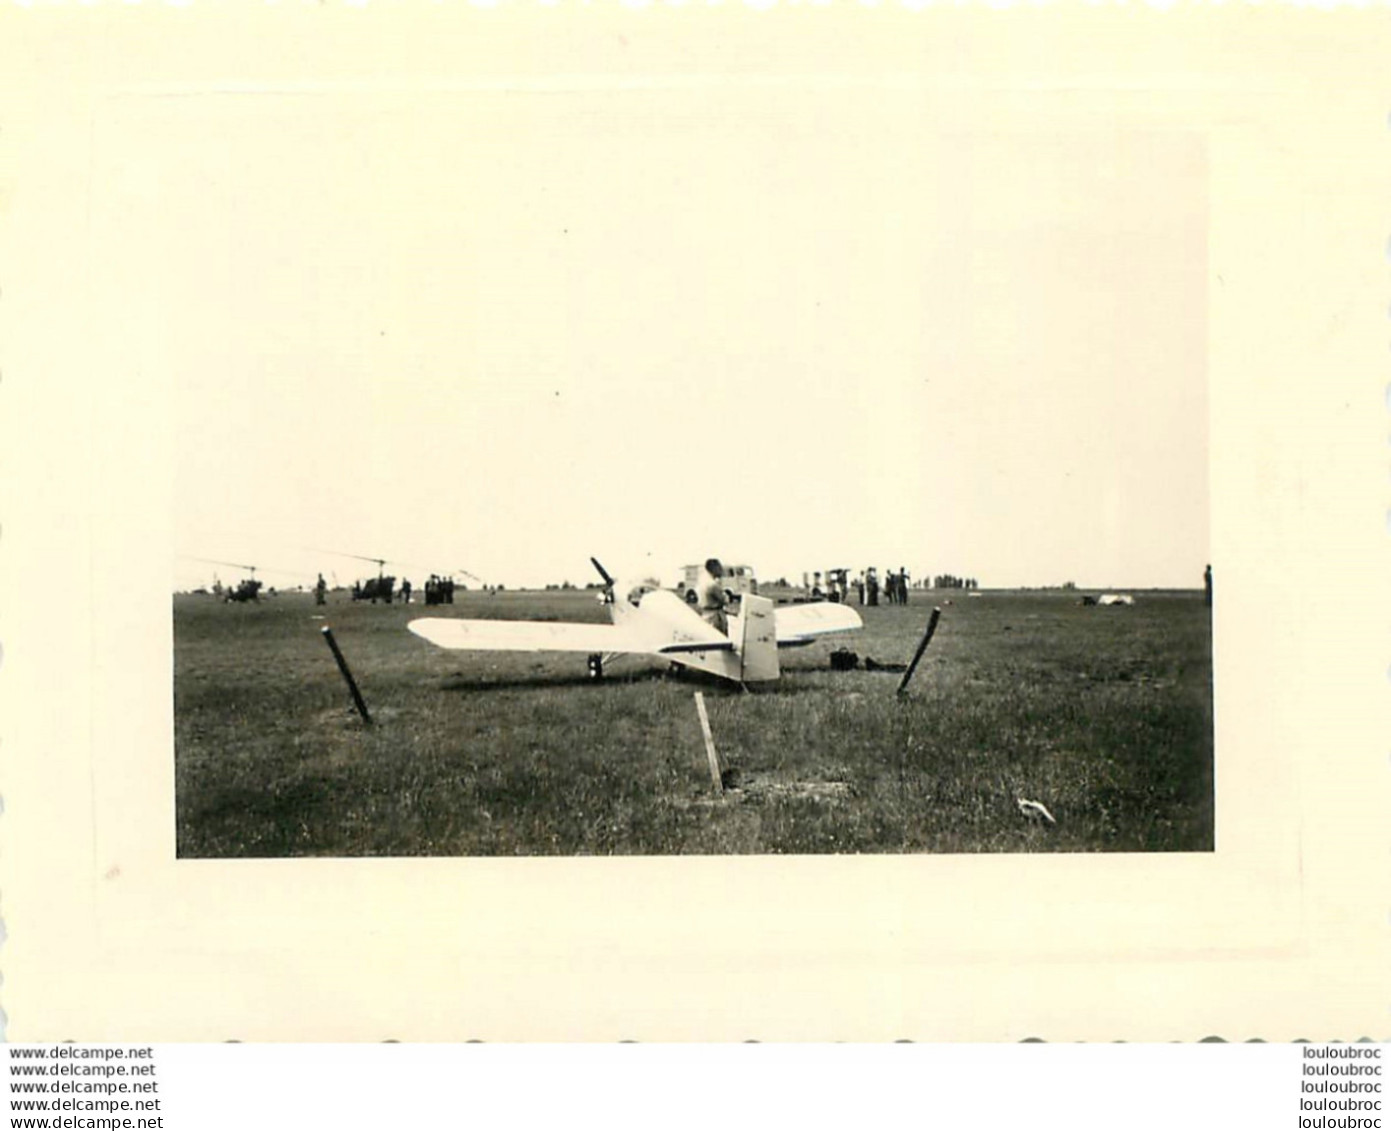 TOUSSUS LE NOBLE 1954  AVION DRUINE TURBULENT  PHOTO 10.50 X 8 CM - Aviation